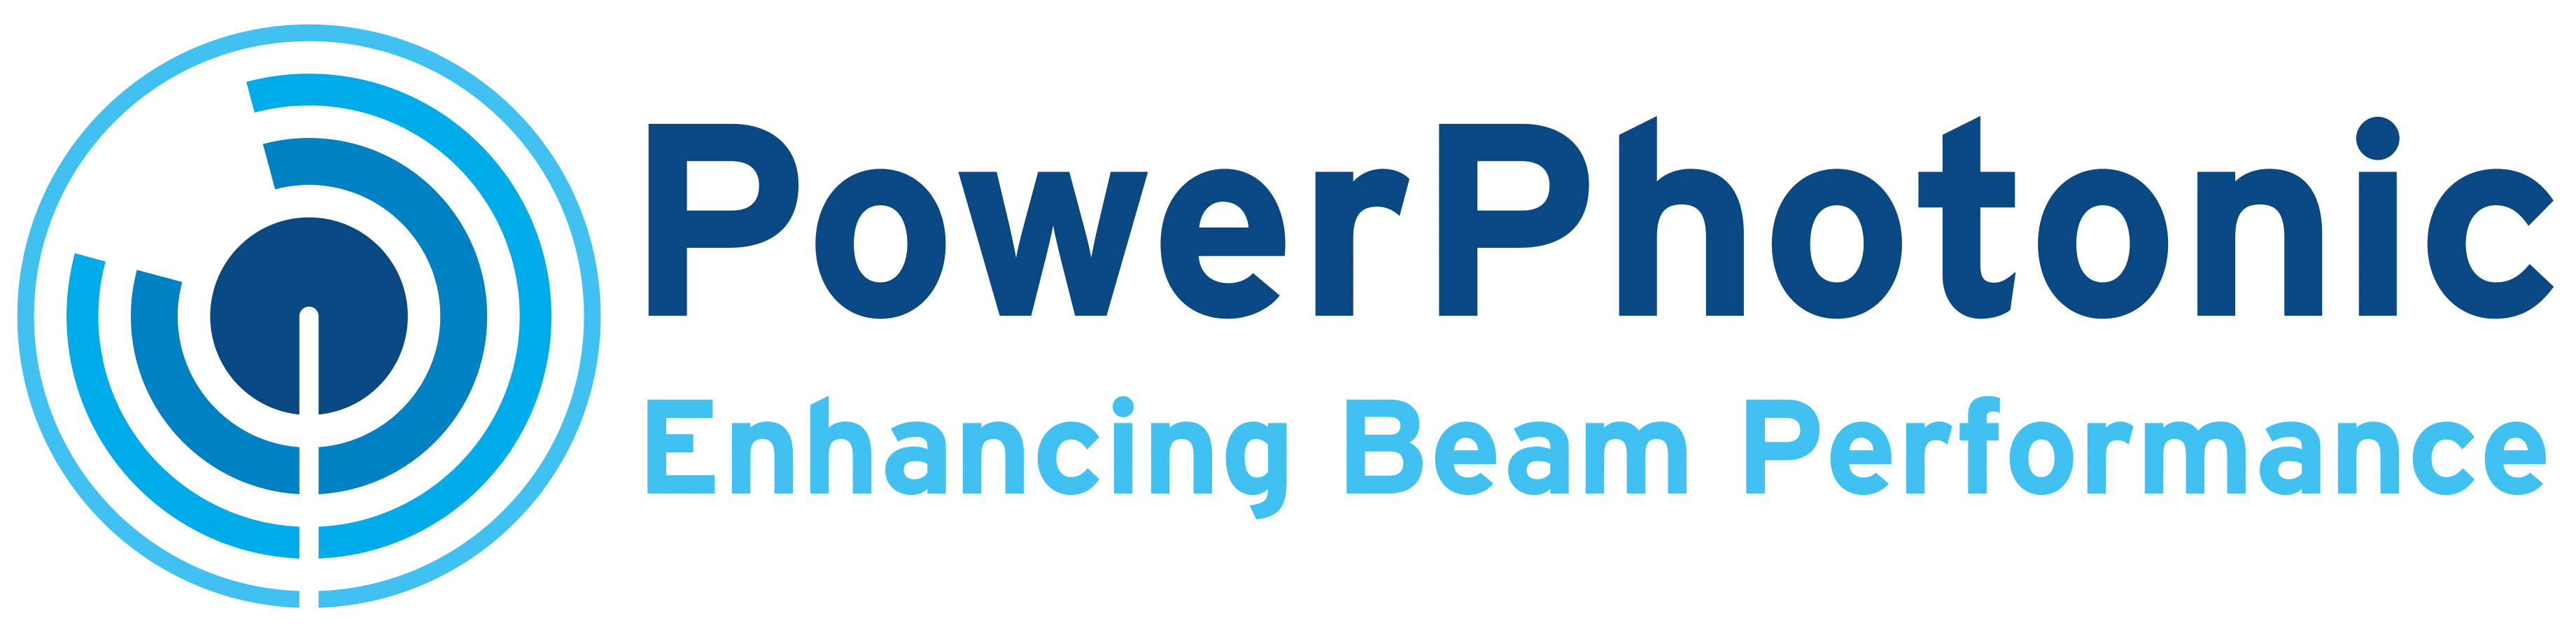 Powerphotonic Ltd